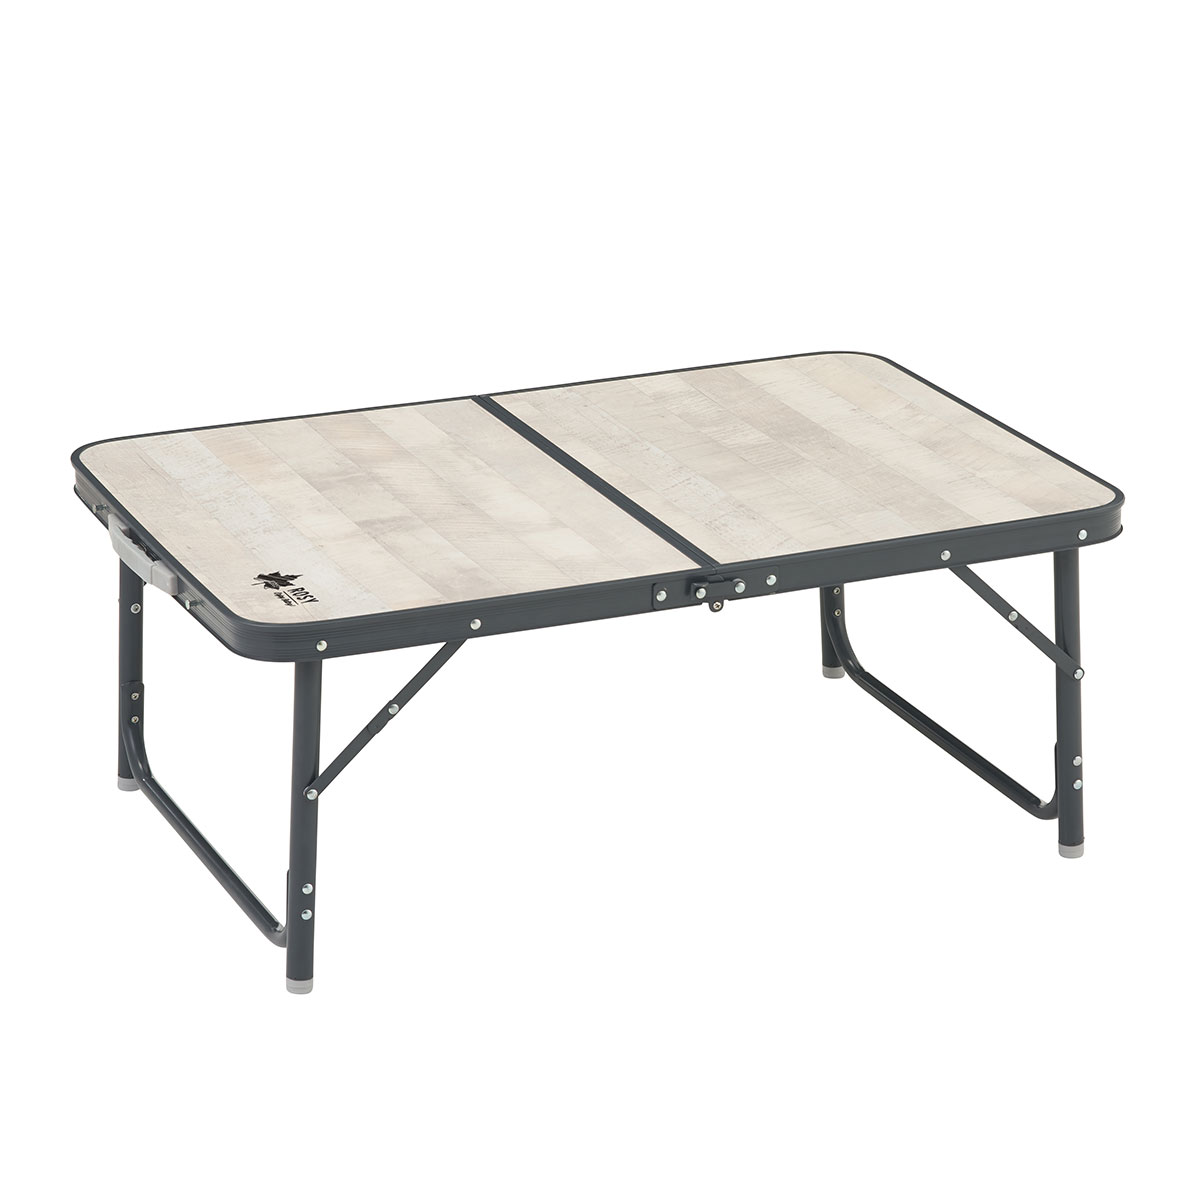 ROSY ファミリーテーブル 9060|ギア|家具|テーブル|製品情報|ロゴス 